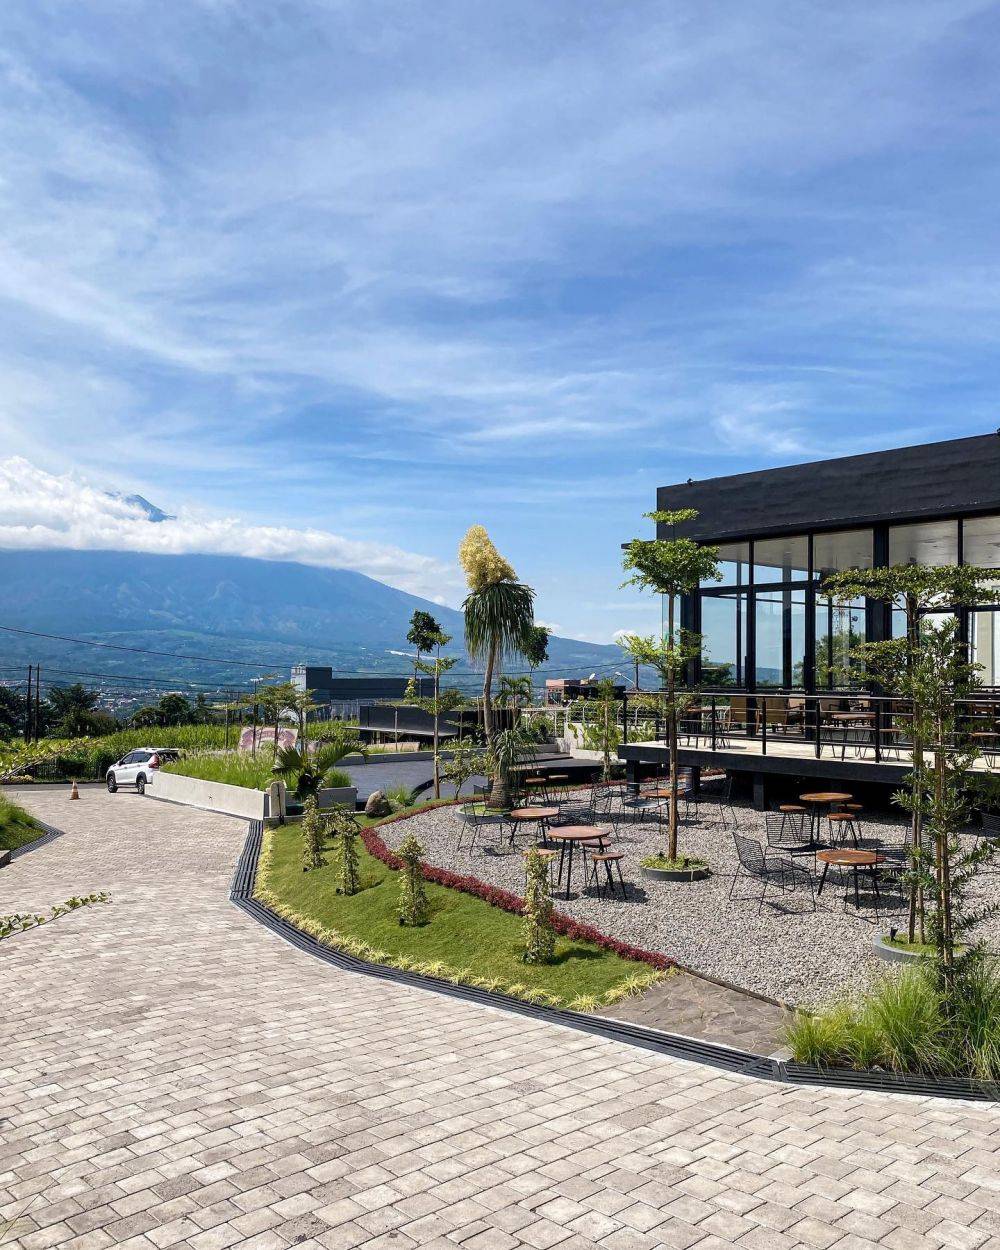 6 Rekomendasi Kafe Kota Batu Malang Dengan Pemandangan Pegunungan Yang Indah